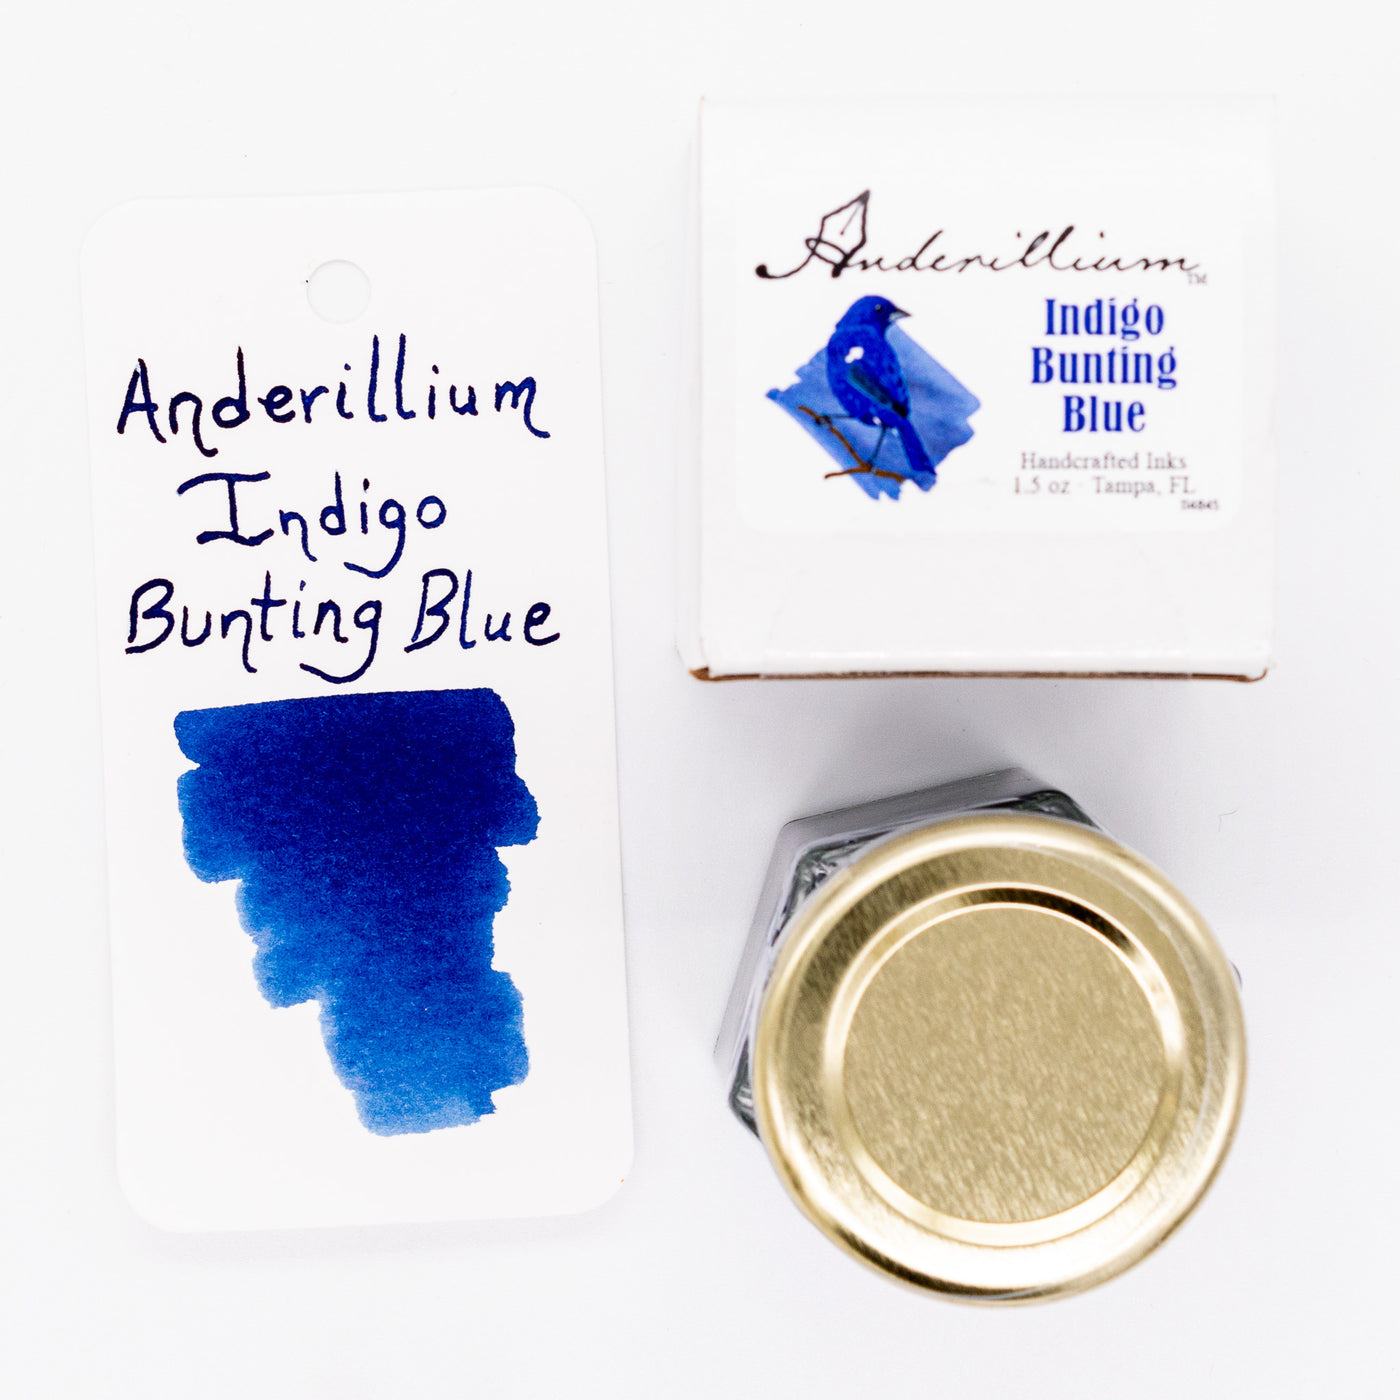 Anderillium Indigo Bunting Blue Ink Bottle 1.5oz glass